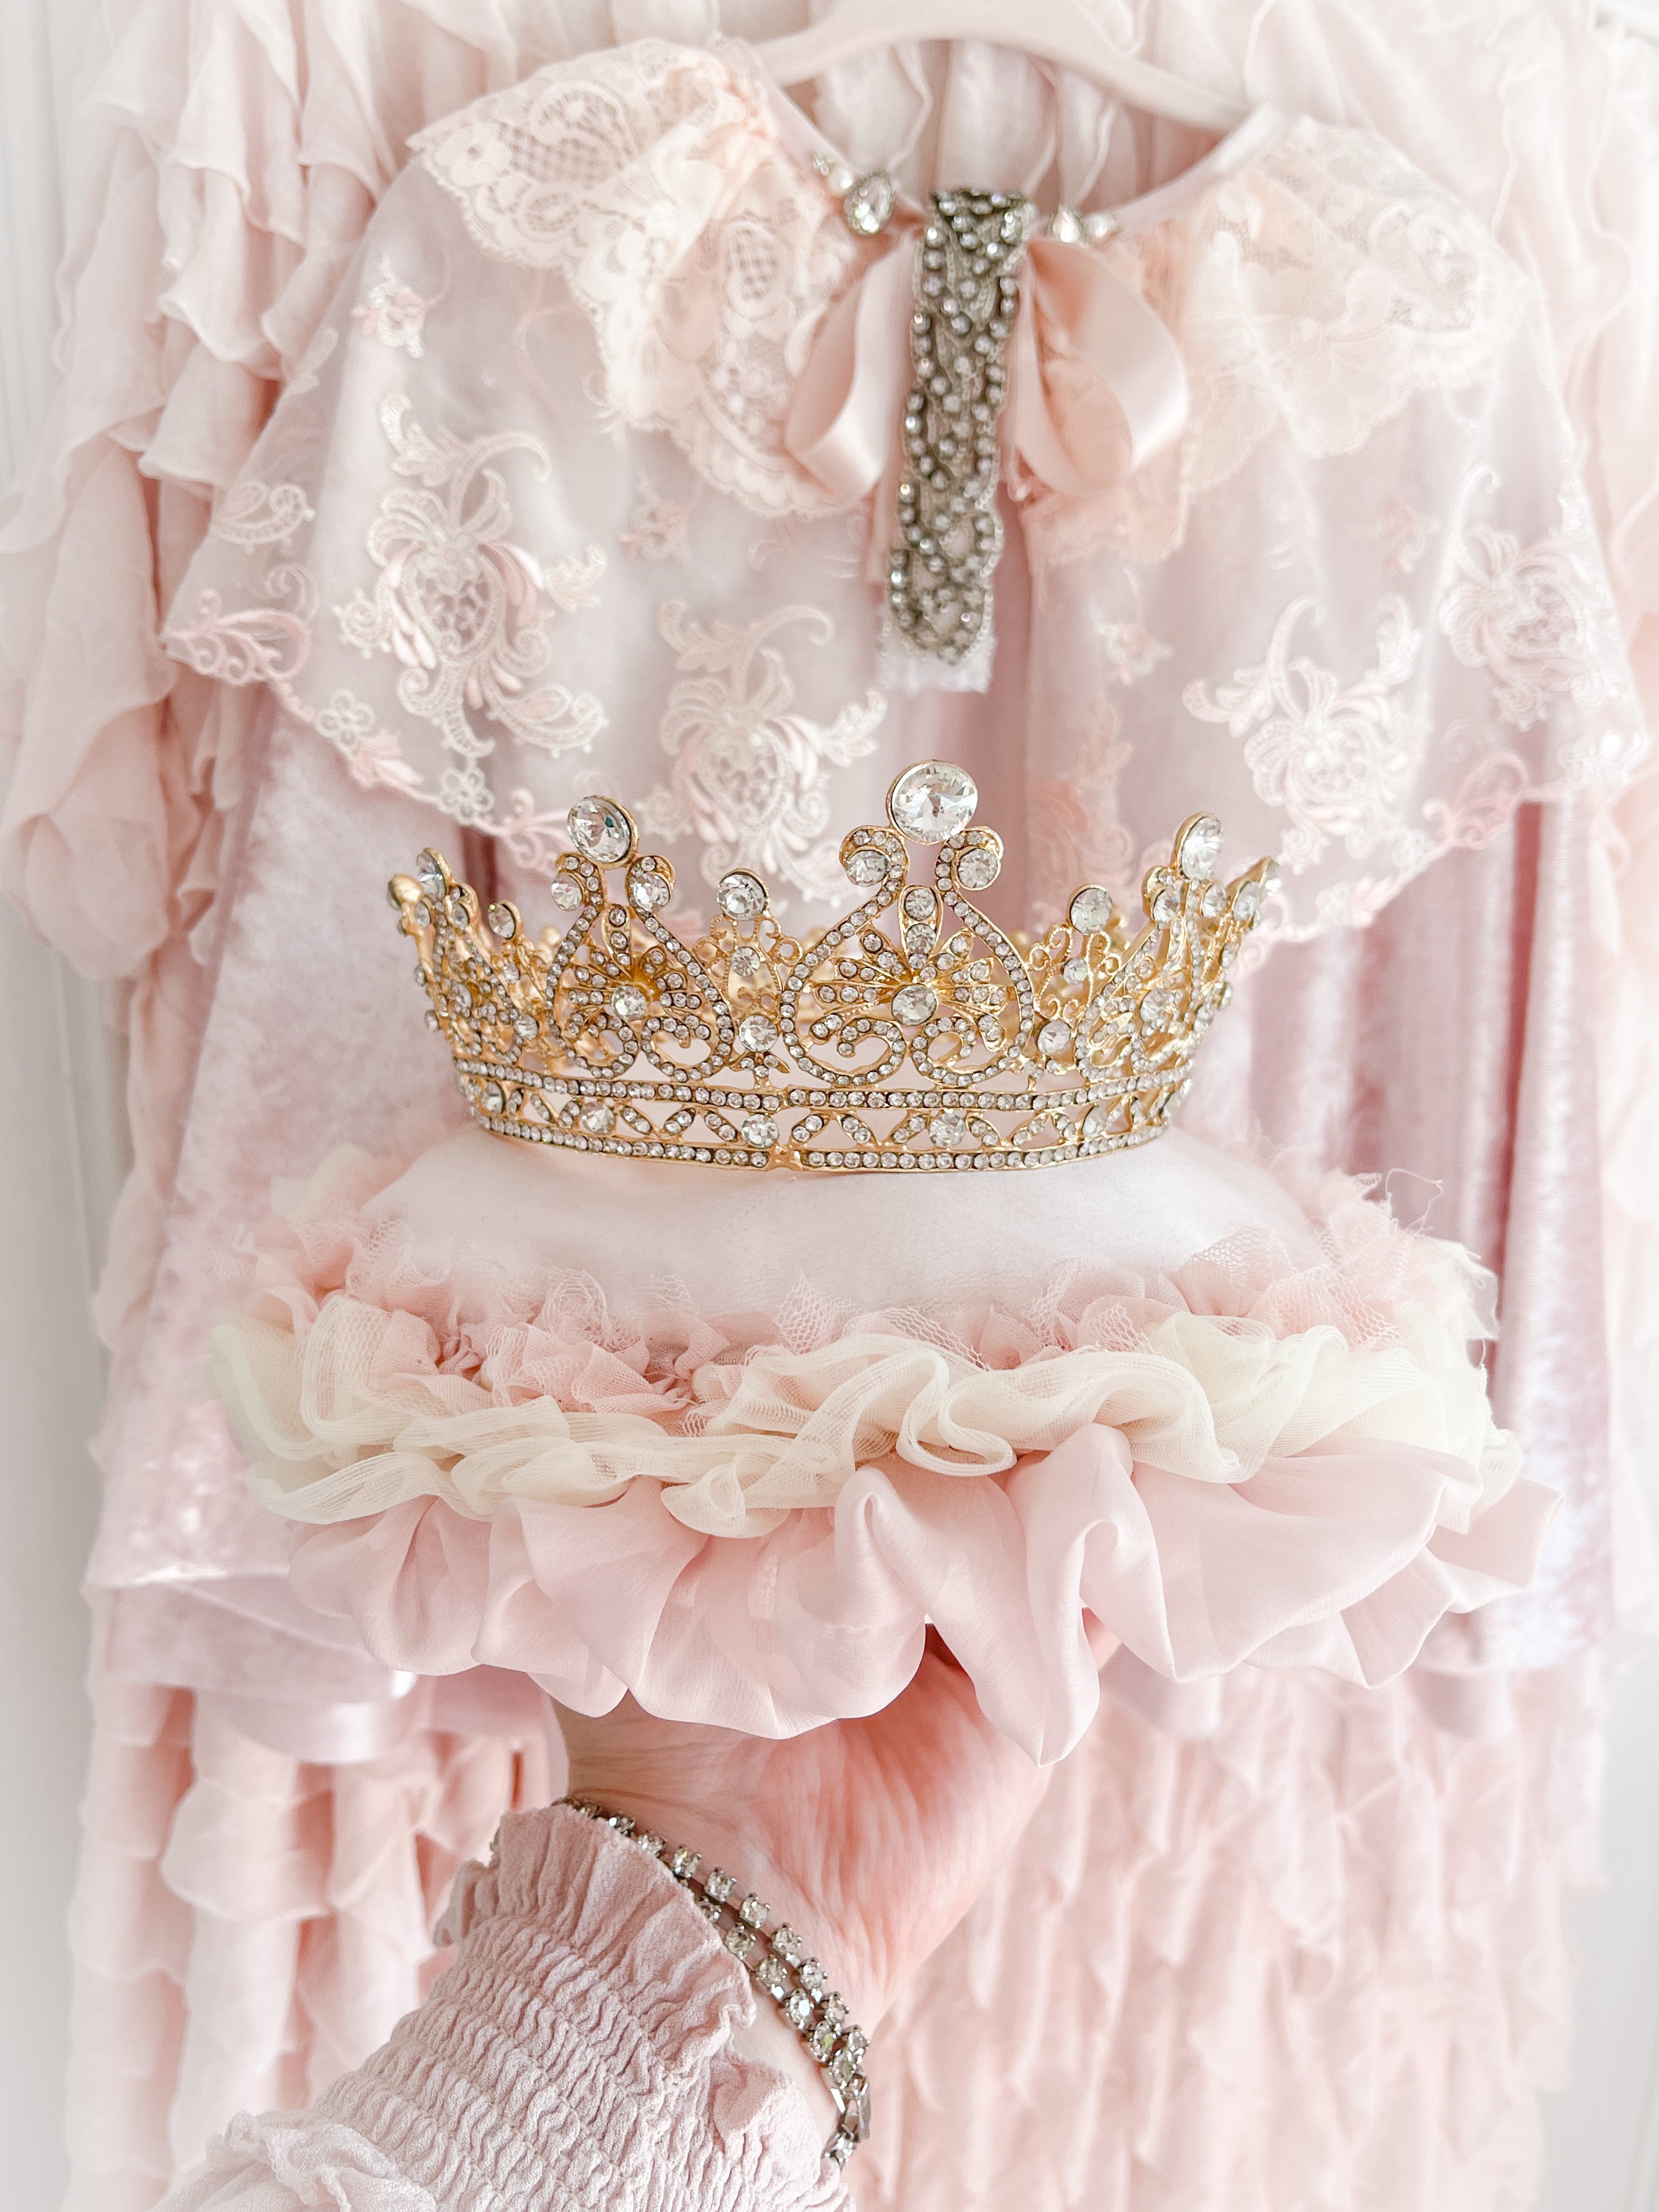 The "Prima Ballerina" Gold Crown